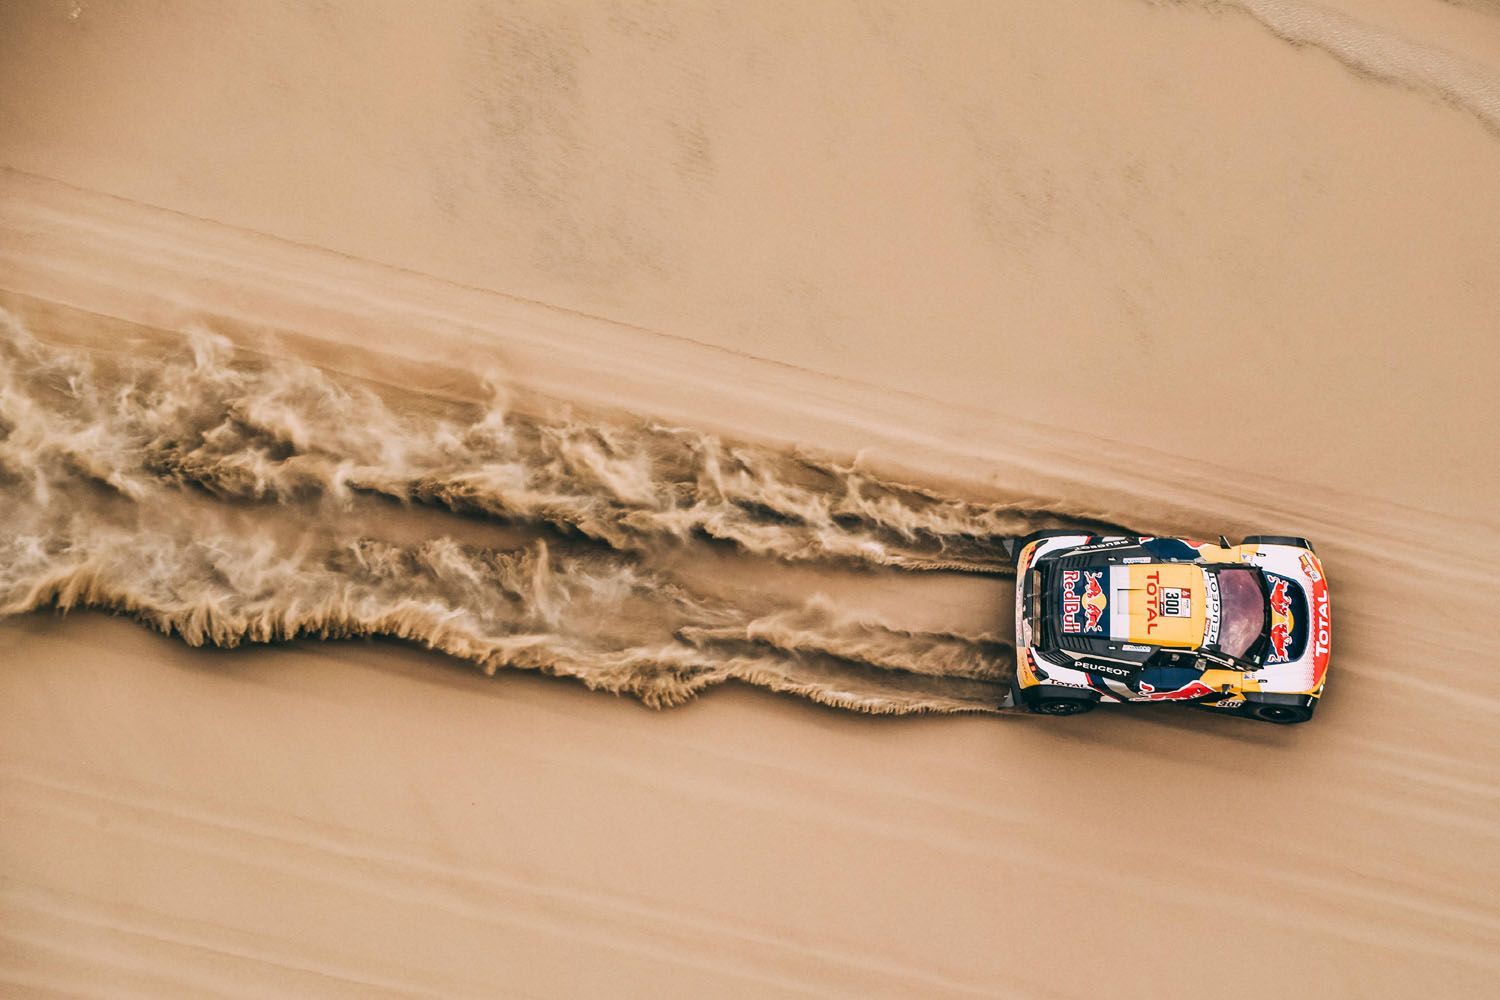 Rallye Dakar 2018, 2. etapa: Stephane Peterhansel, Peugeot